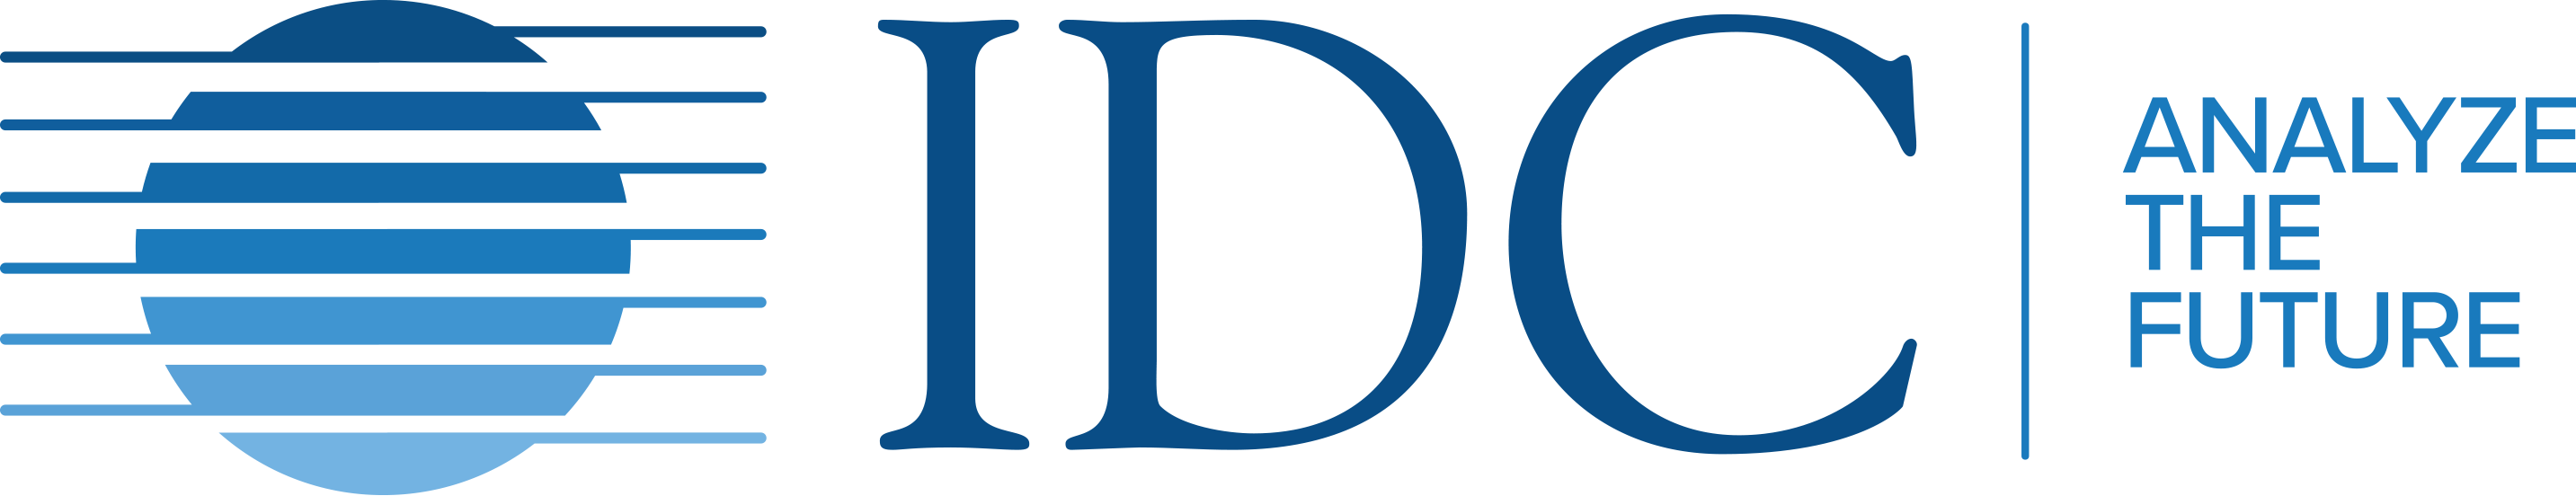 IDC logo horizontal fullcolor 2866x552